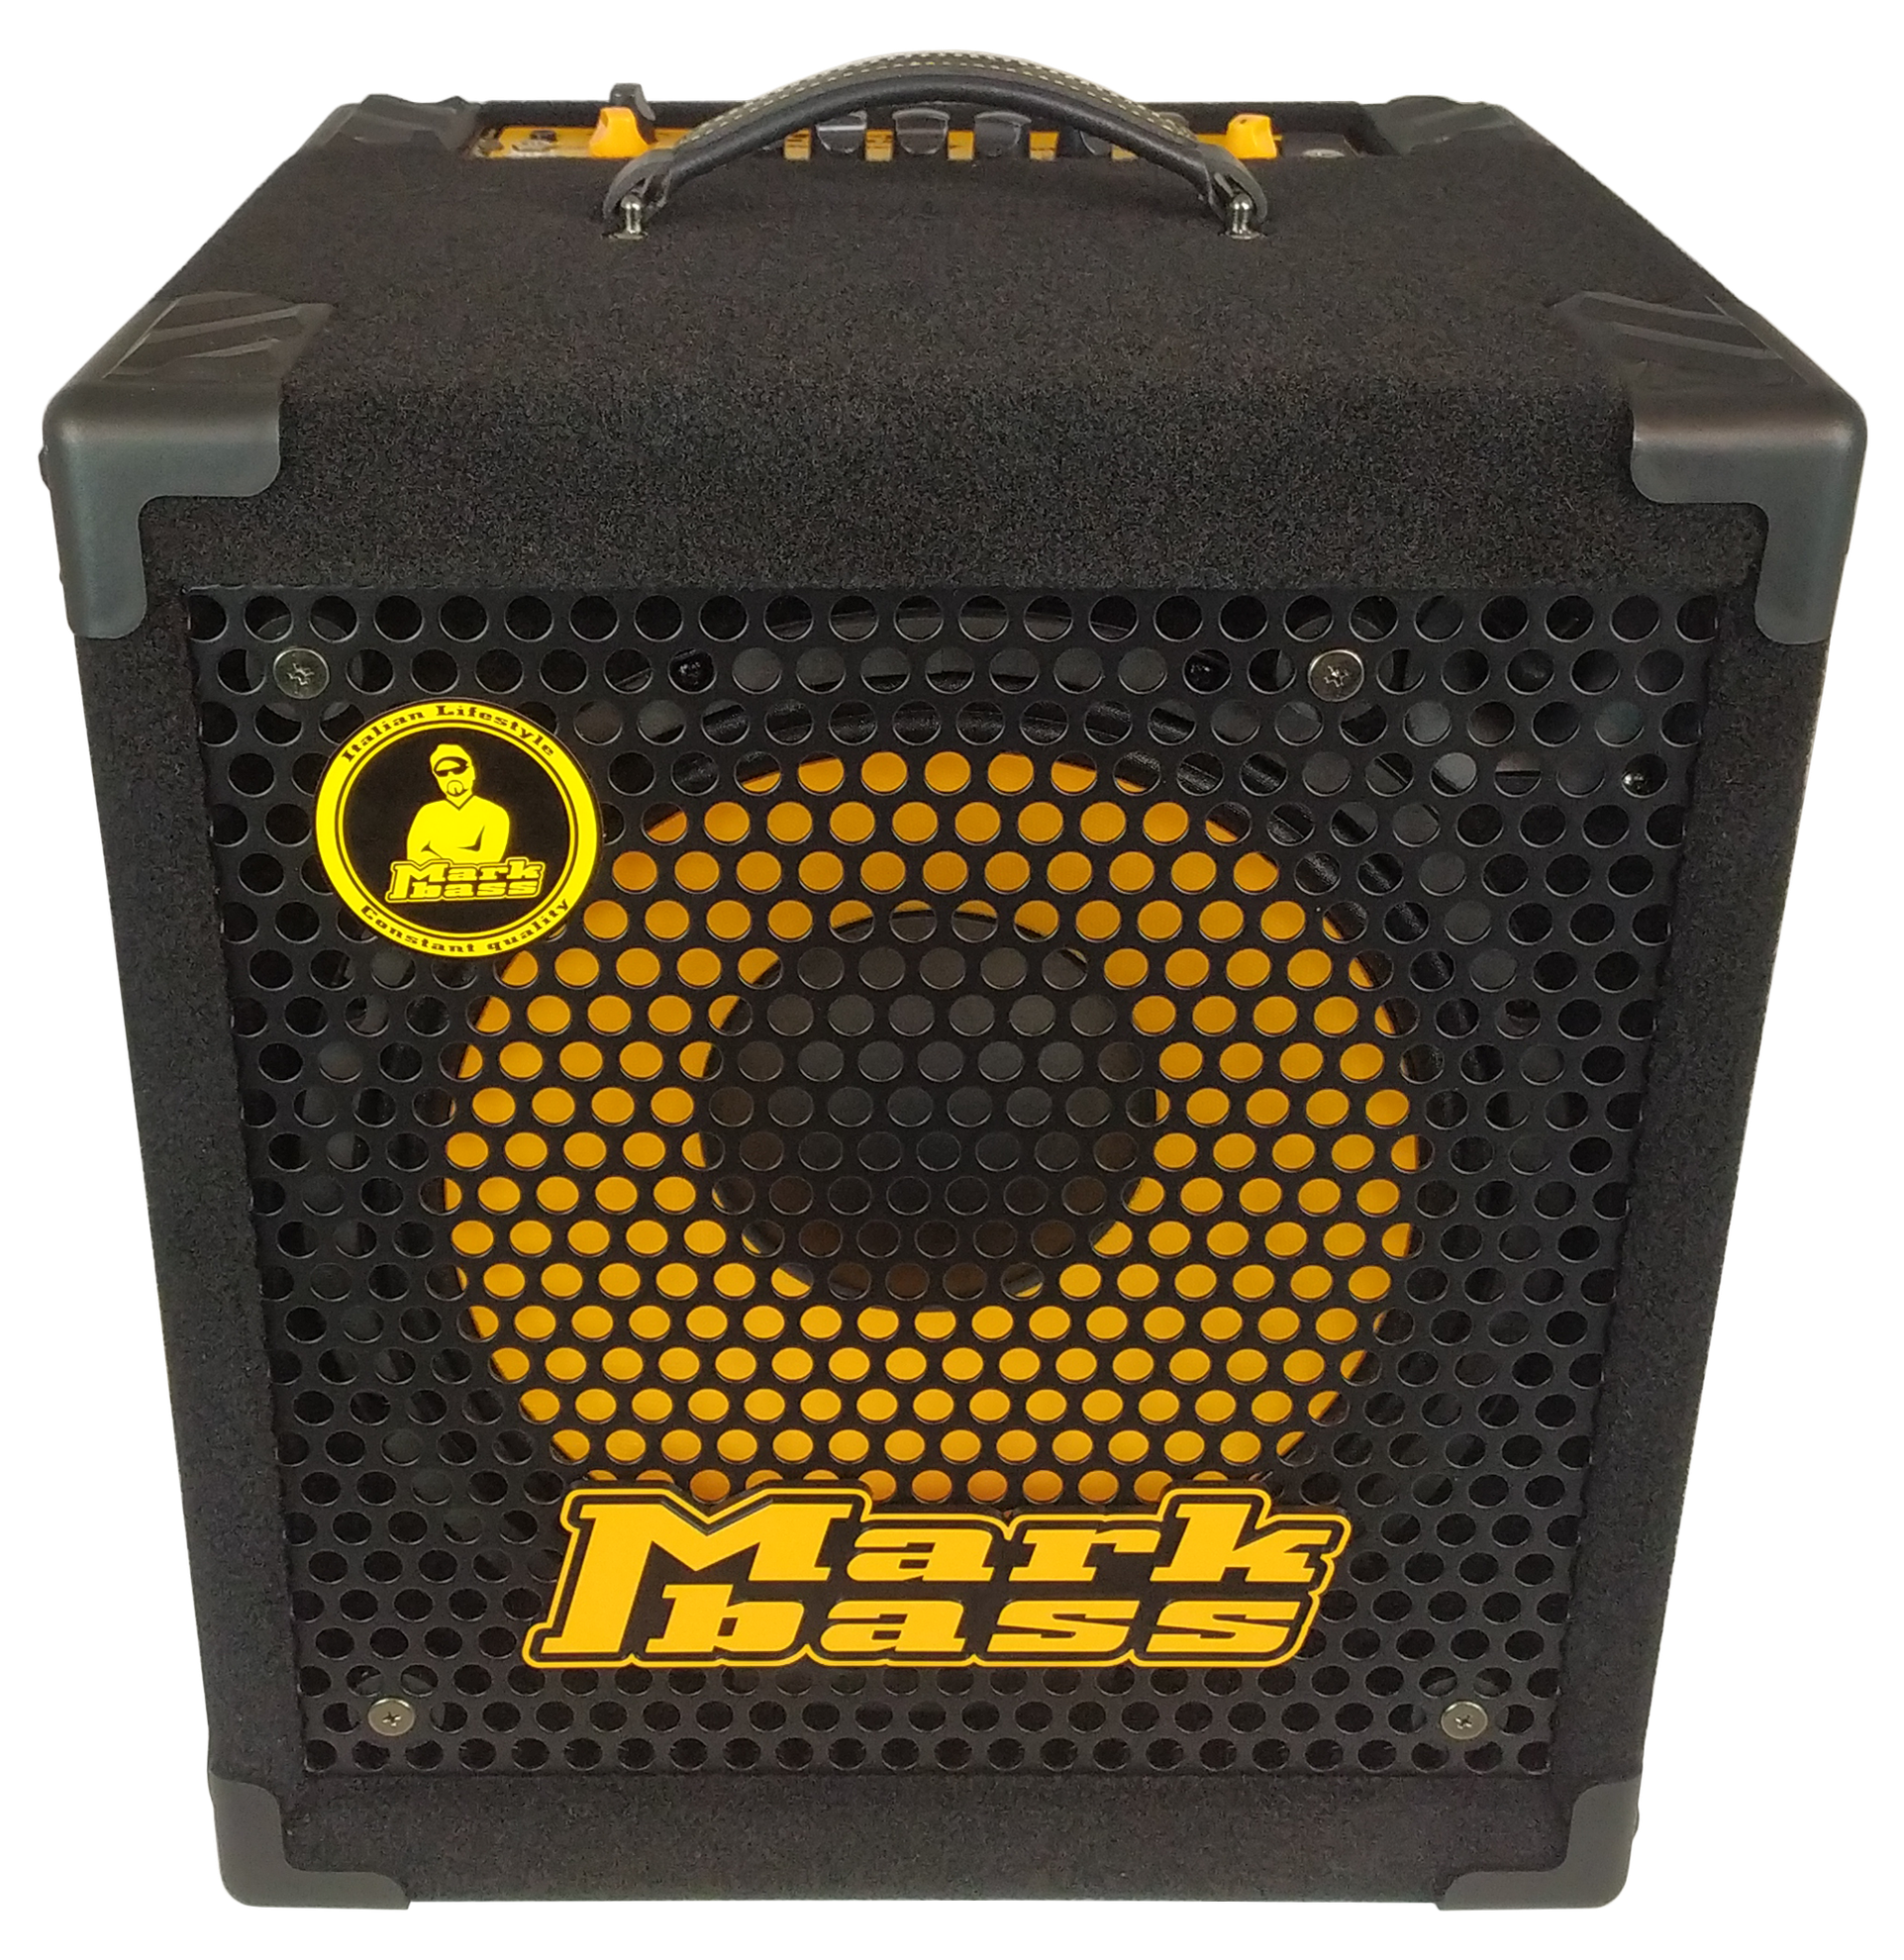 Markbass Mini Cmd 121 P Iv 1x12 300w Black - Combo amplificador para bajo - Variation 2